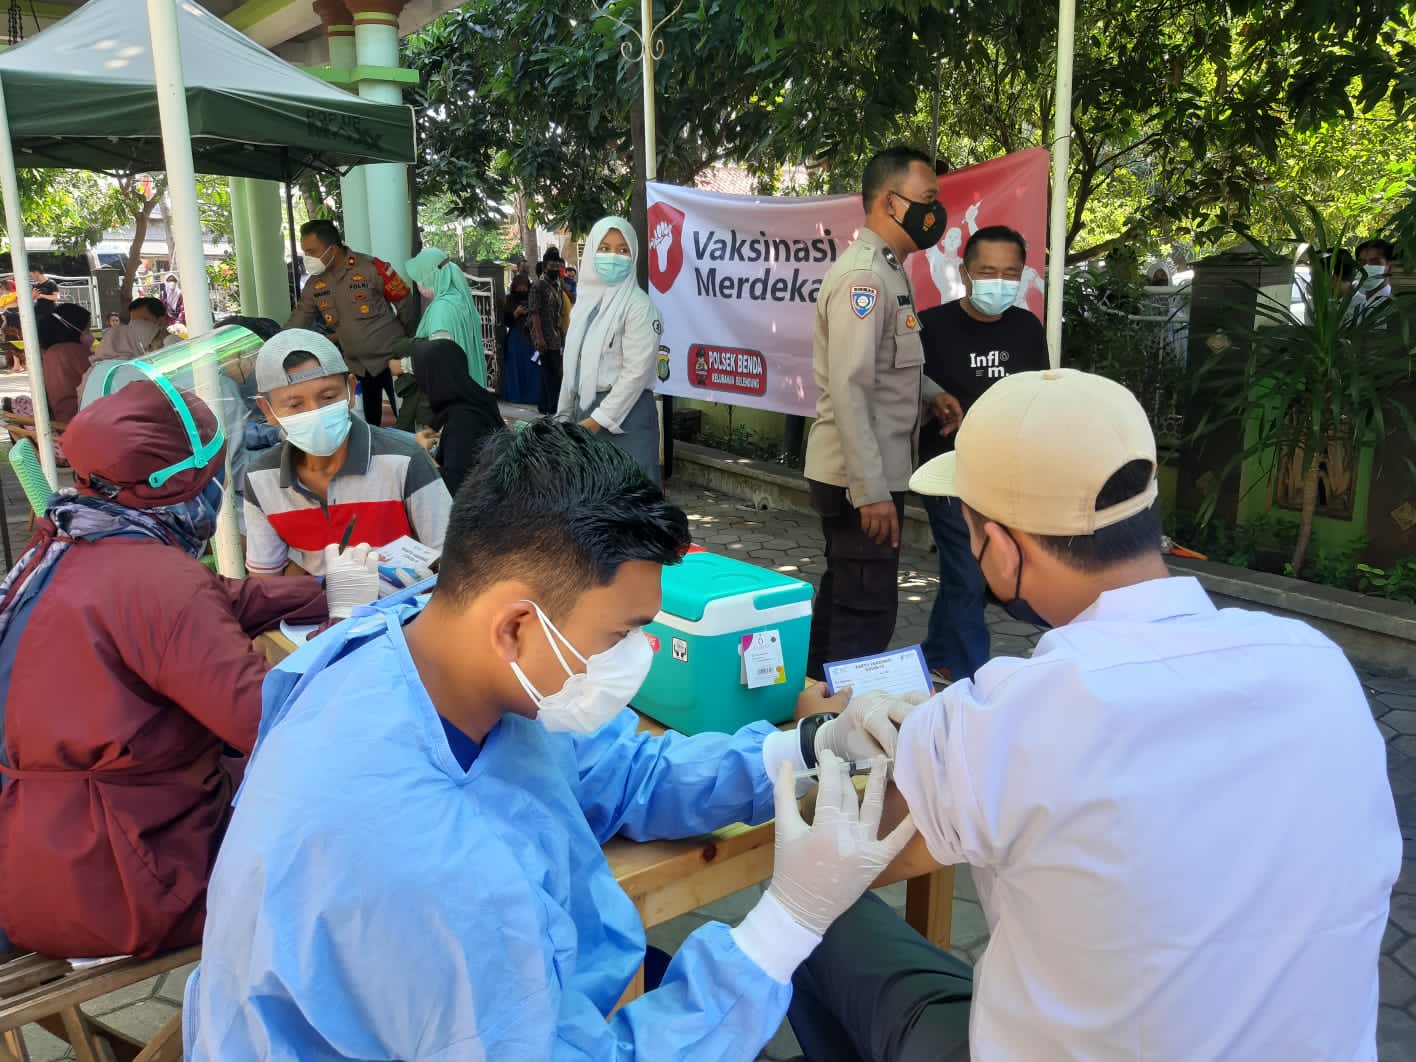 Polsek Benda Rutin Buka Gerai Vaksin Mobile, Jumlah Penduduk Tervaksin di Kecamatan Benda Mendekati 60 Persen - Desapedia